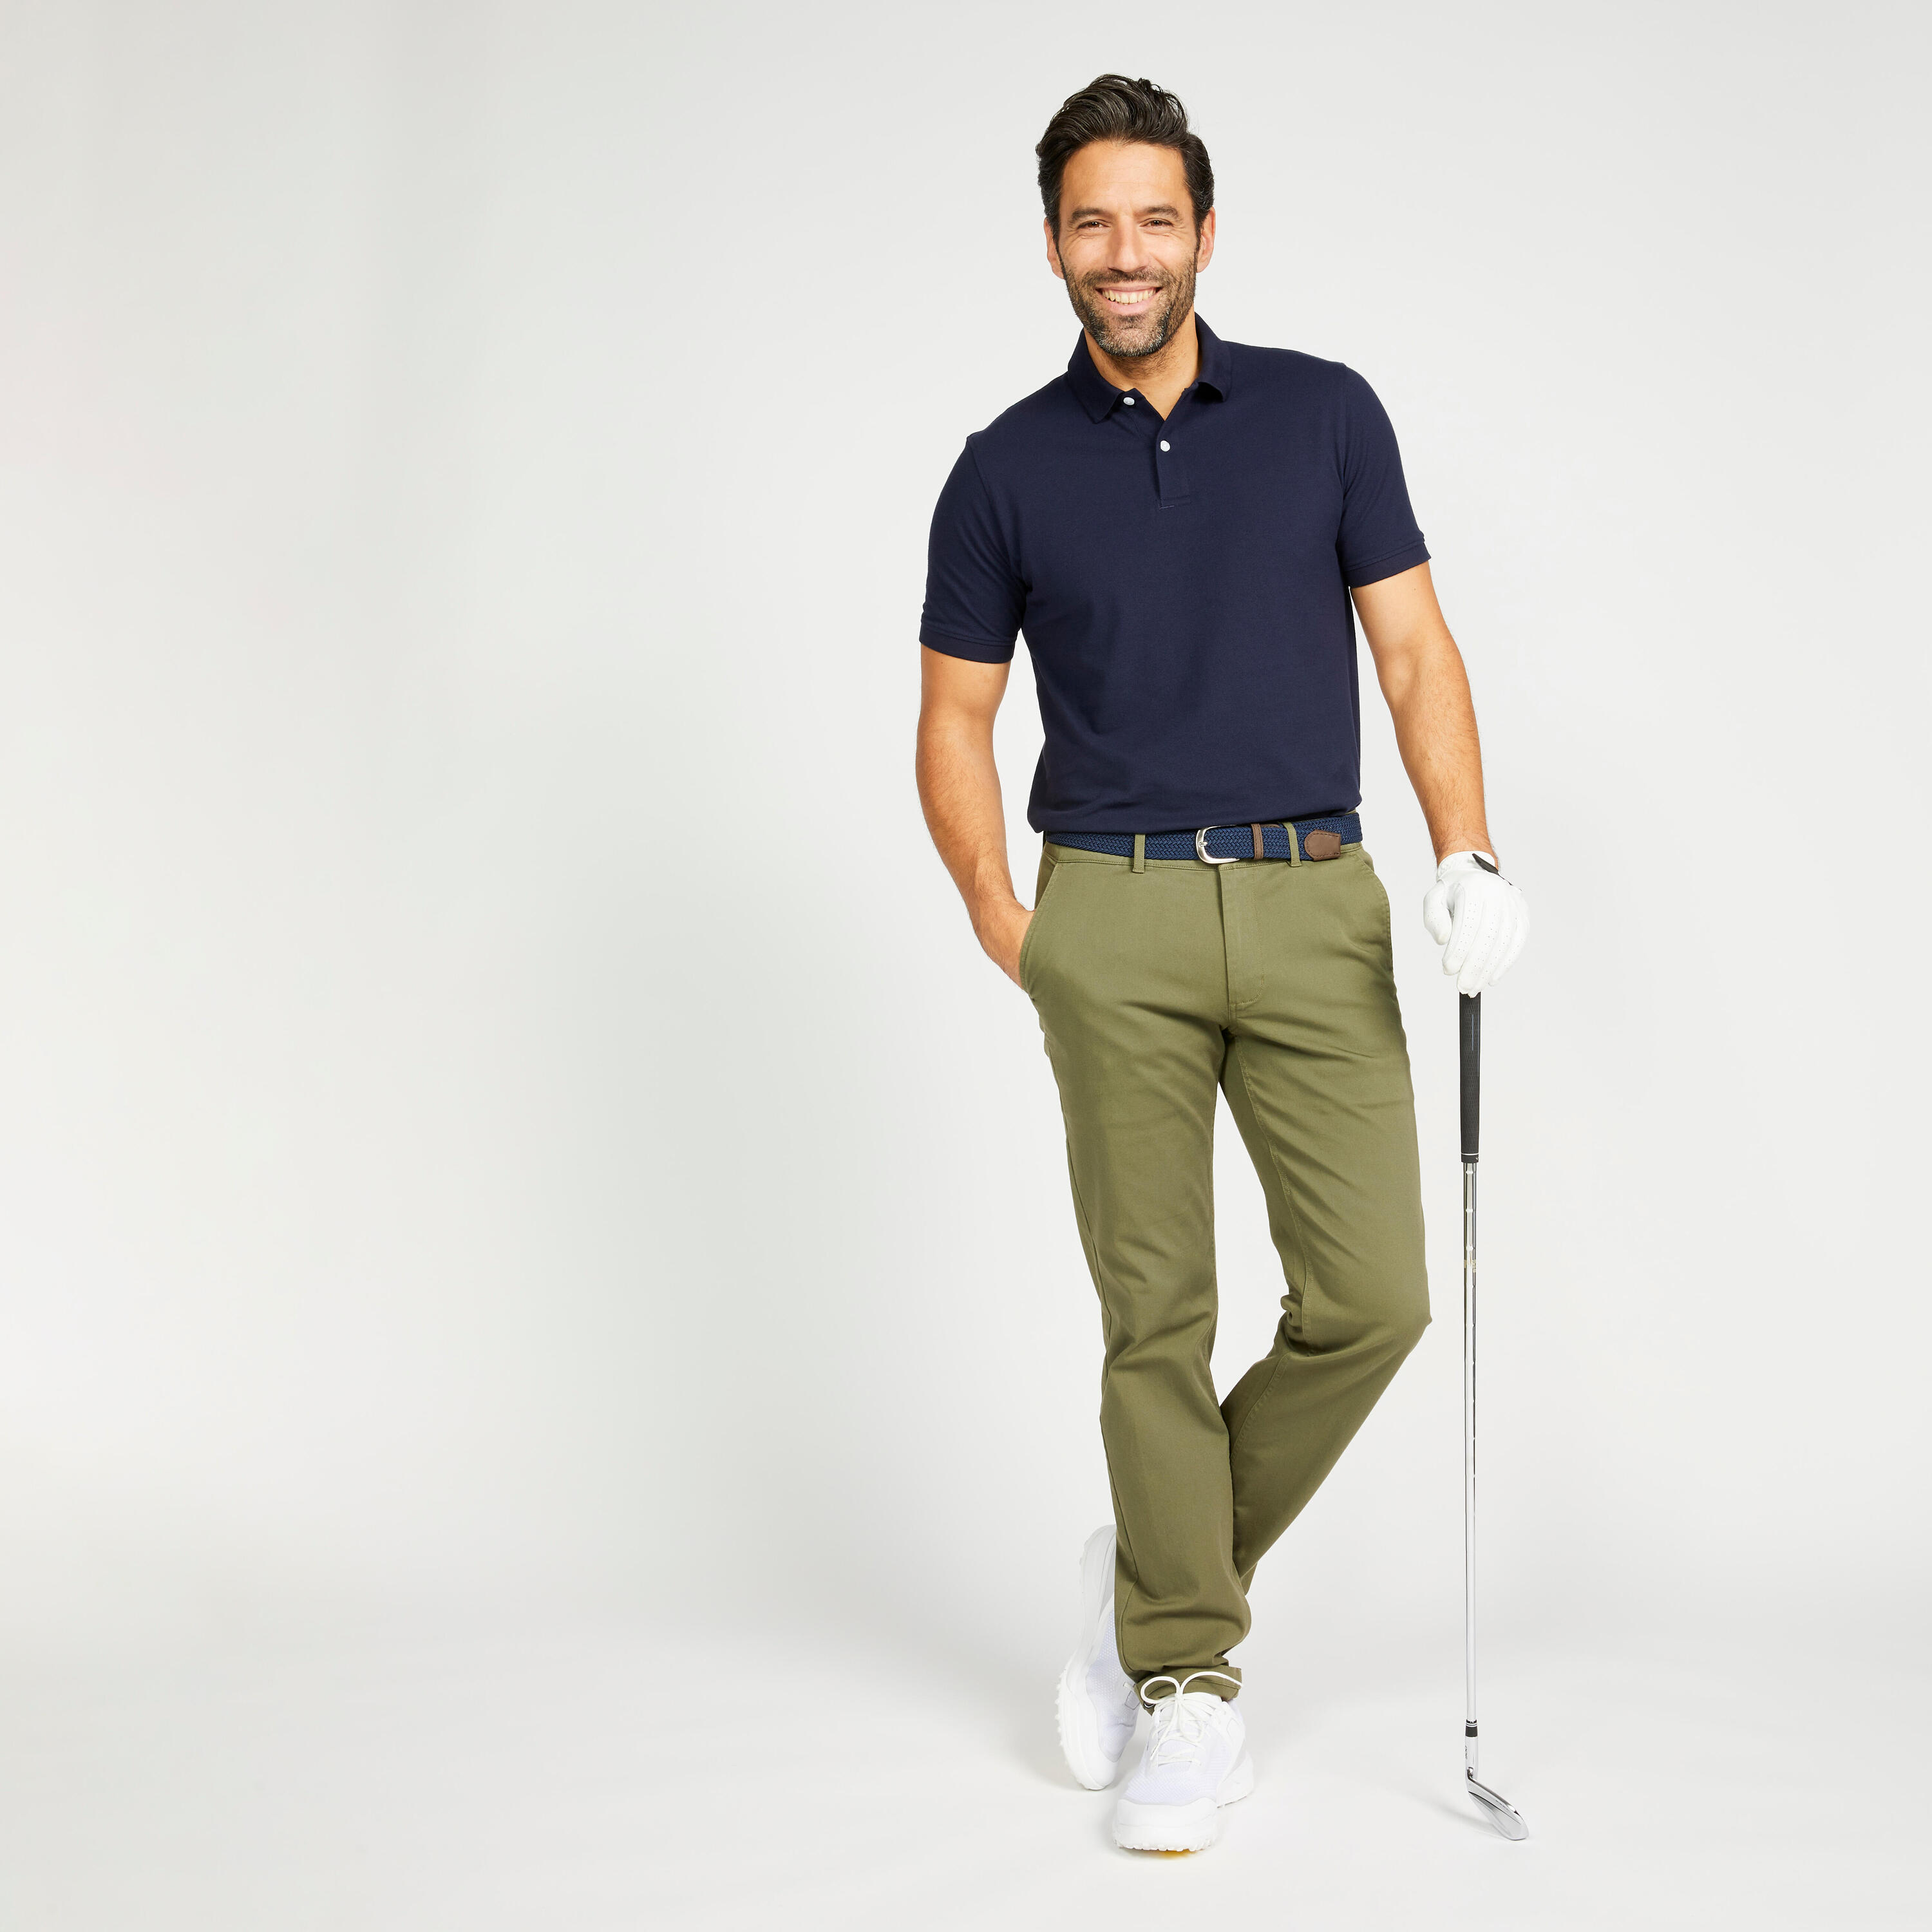 Men's golf short-sleeved polo shirt - MW500 navy blue 2/5